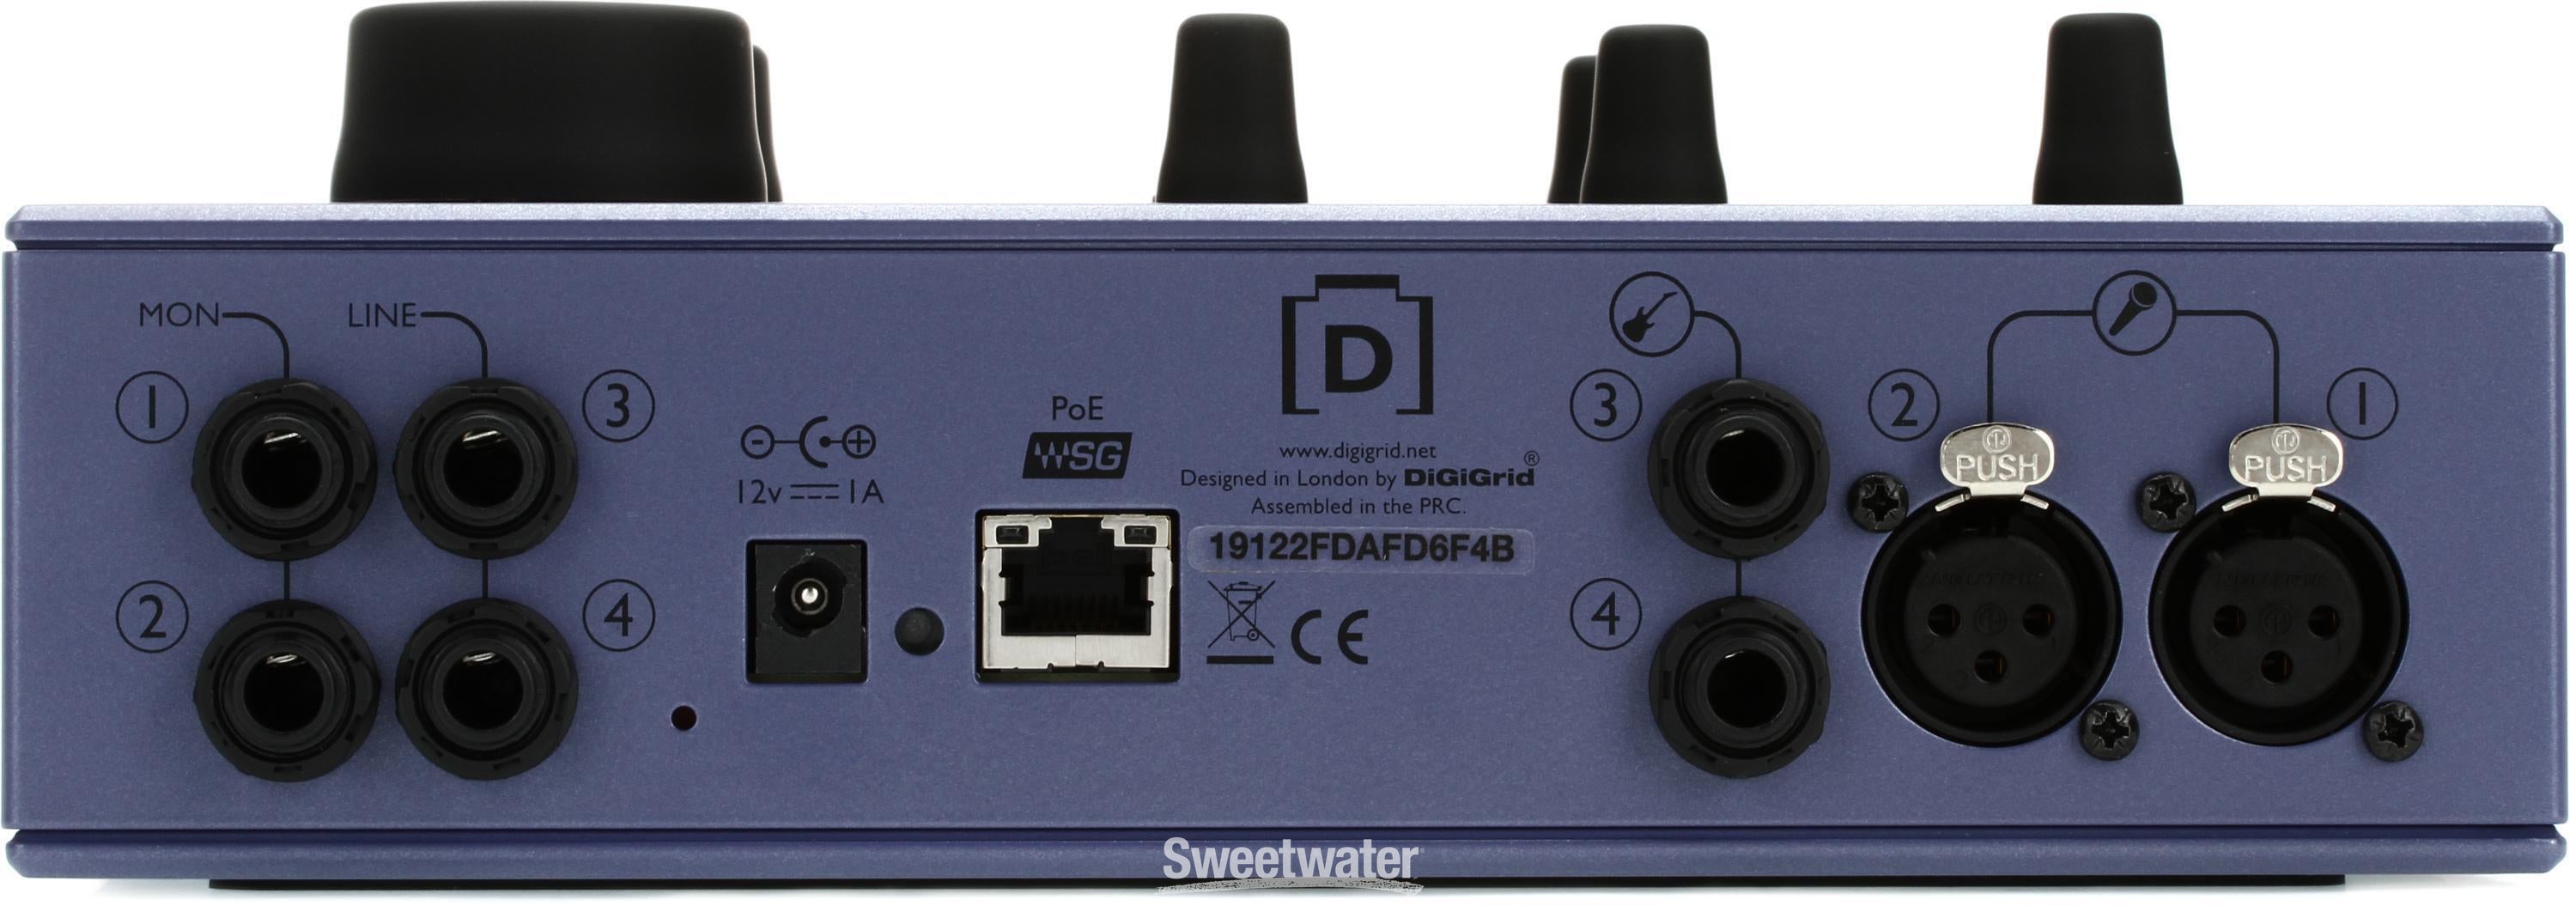 DiGiGrid D Cube Desktop - Desktop Interface | Sweetwater